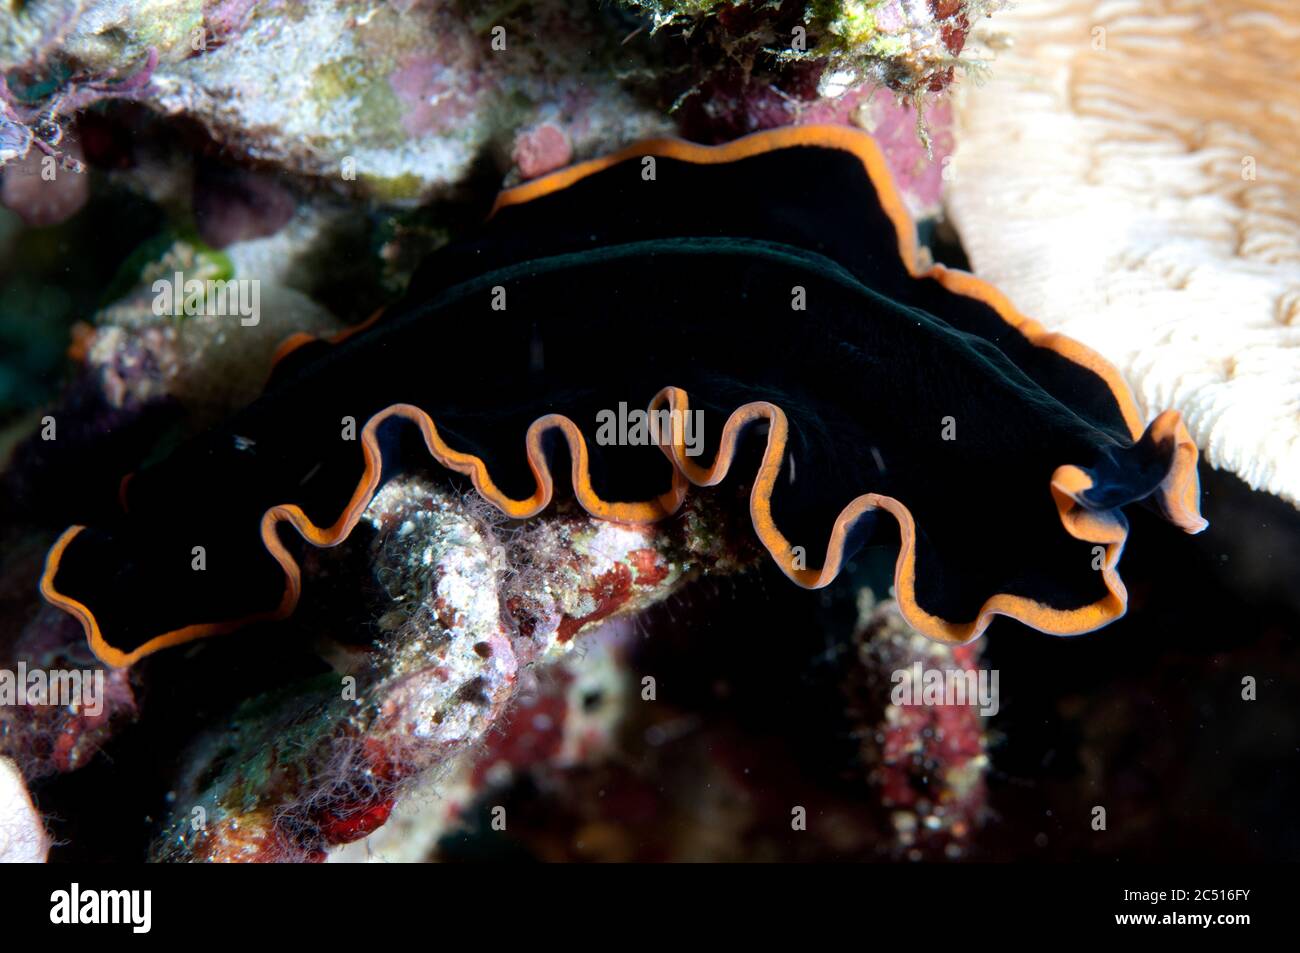 Flatworm, Pseudoceros sp, Neptune's Sea Fan dive site, Wayilbatan, Raja Ampat, West Papua, Indonesia Stock Photo